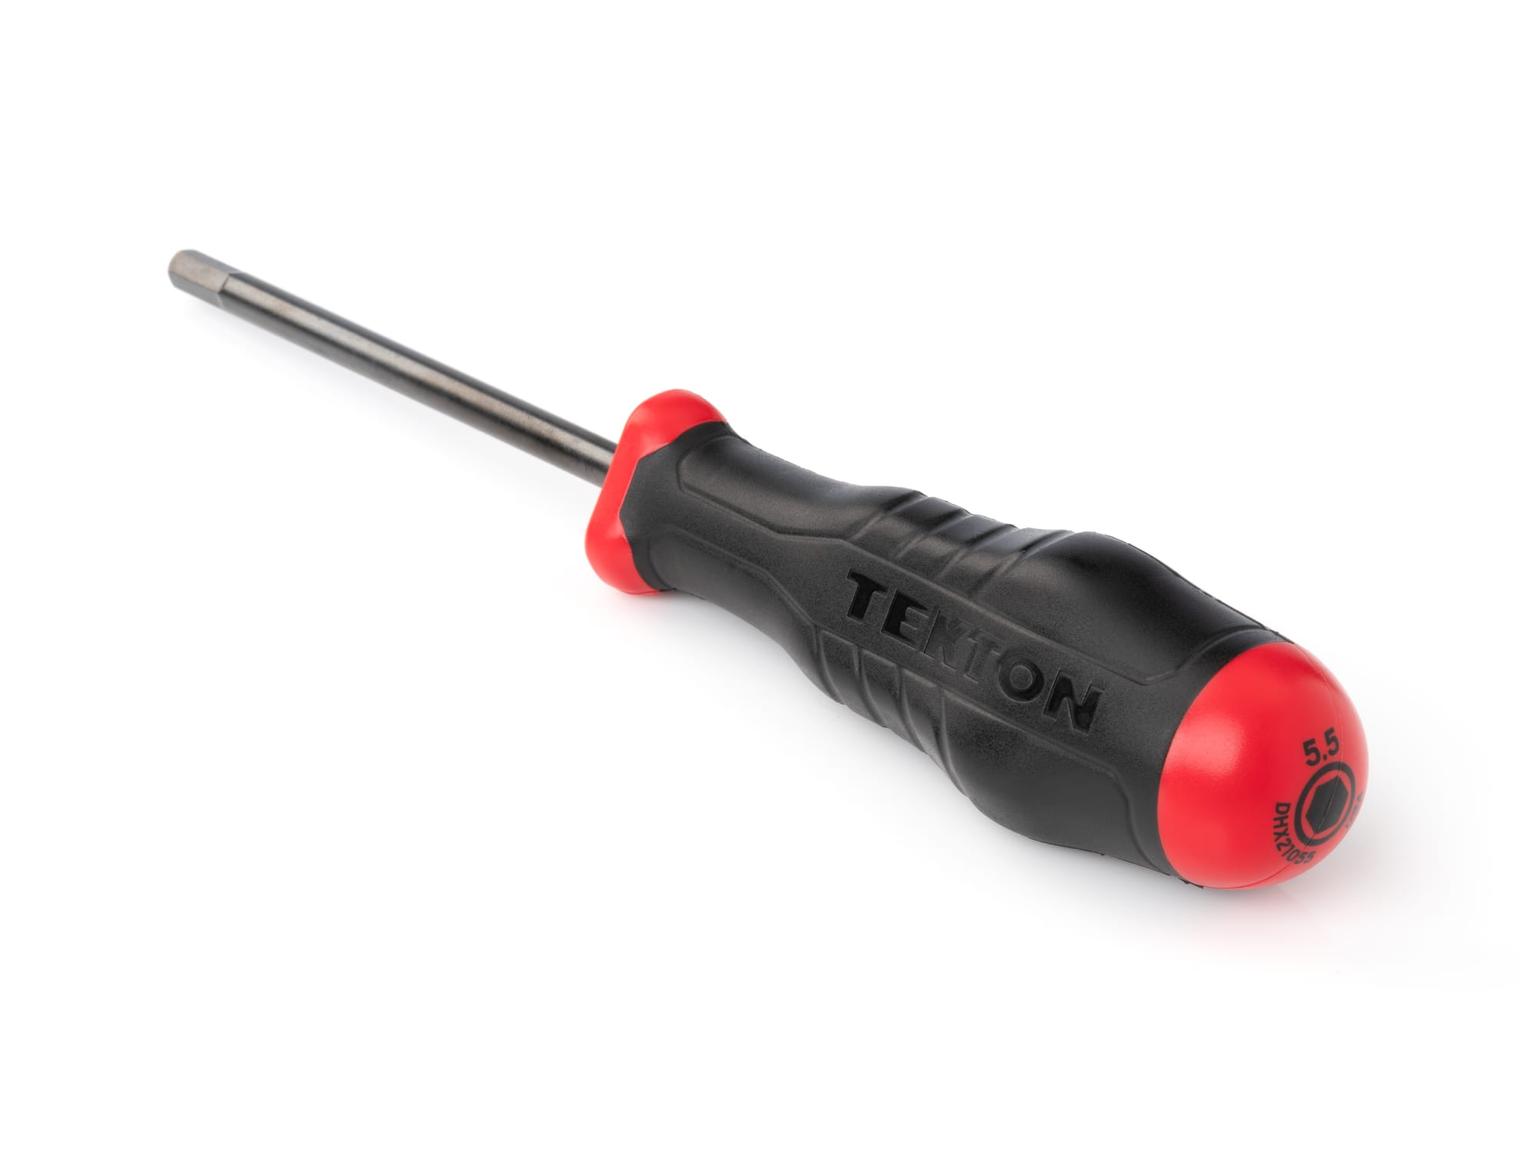 TEKTON DHX21055-T 5.5 mm Hex High-Torque Black Oxide Blade Screwdriver